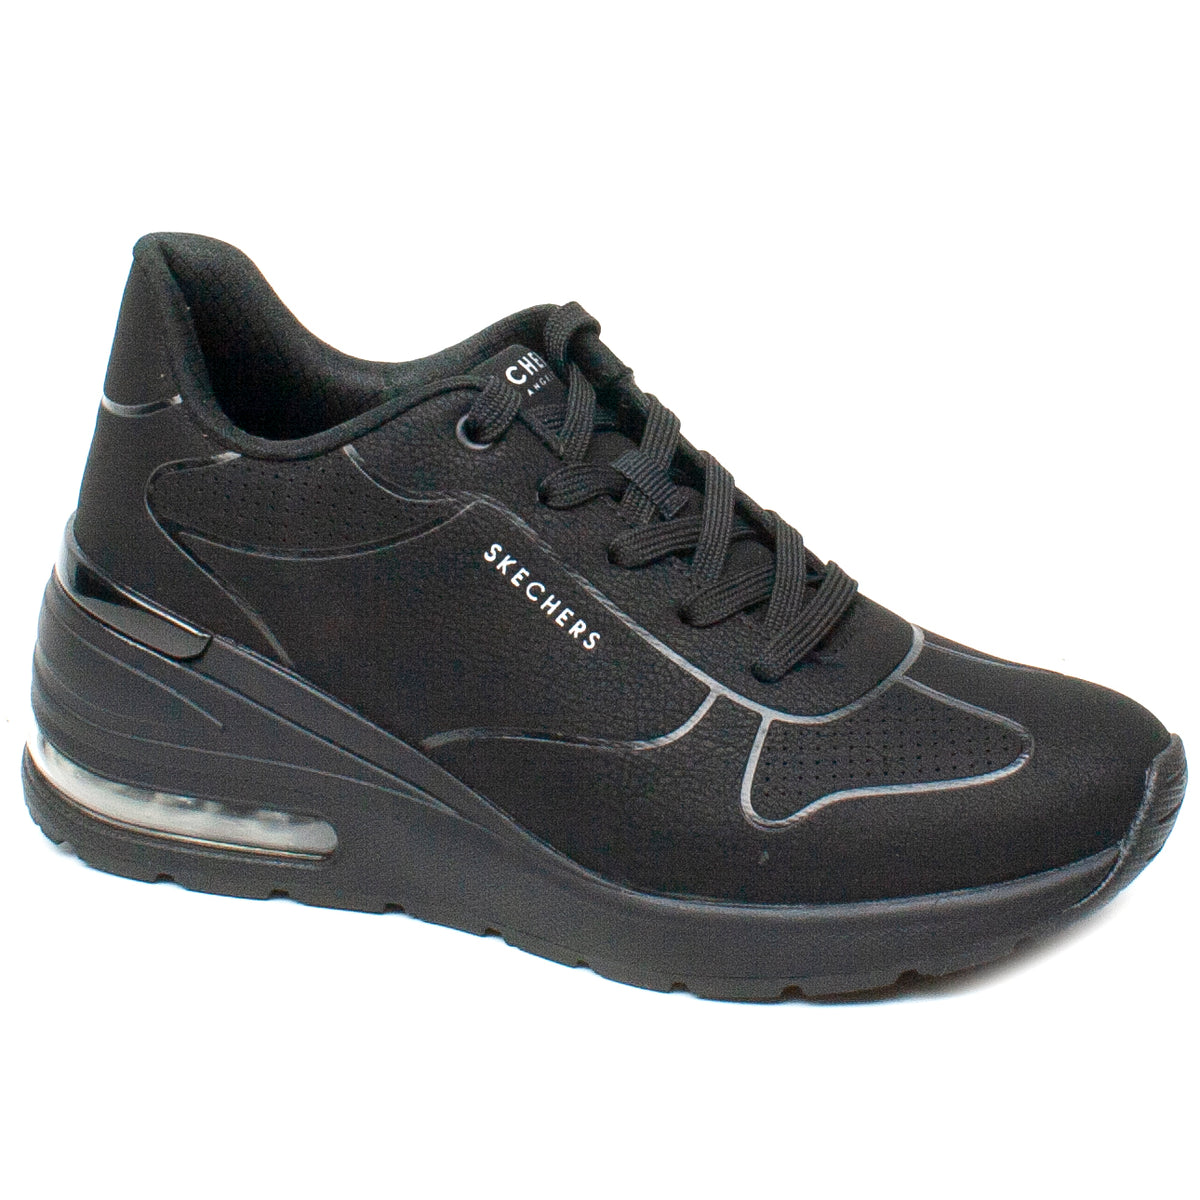 Skechers pantofi dama sport 155400 negru ID2805-NG